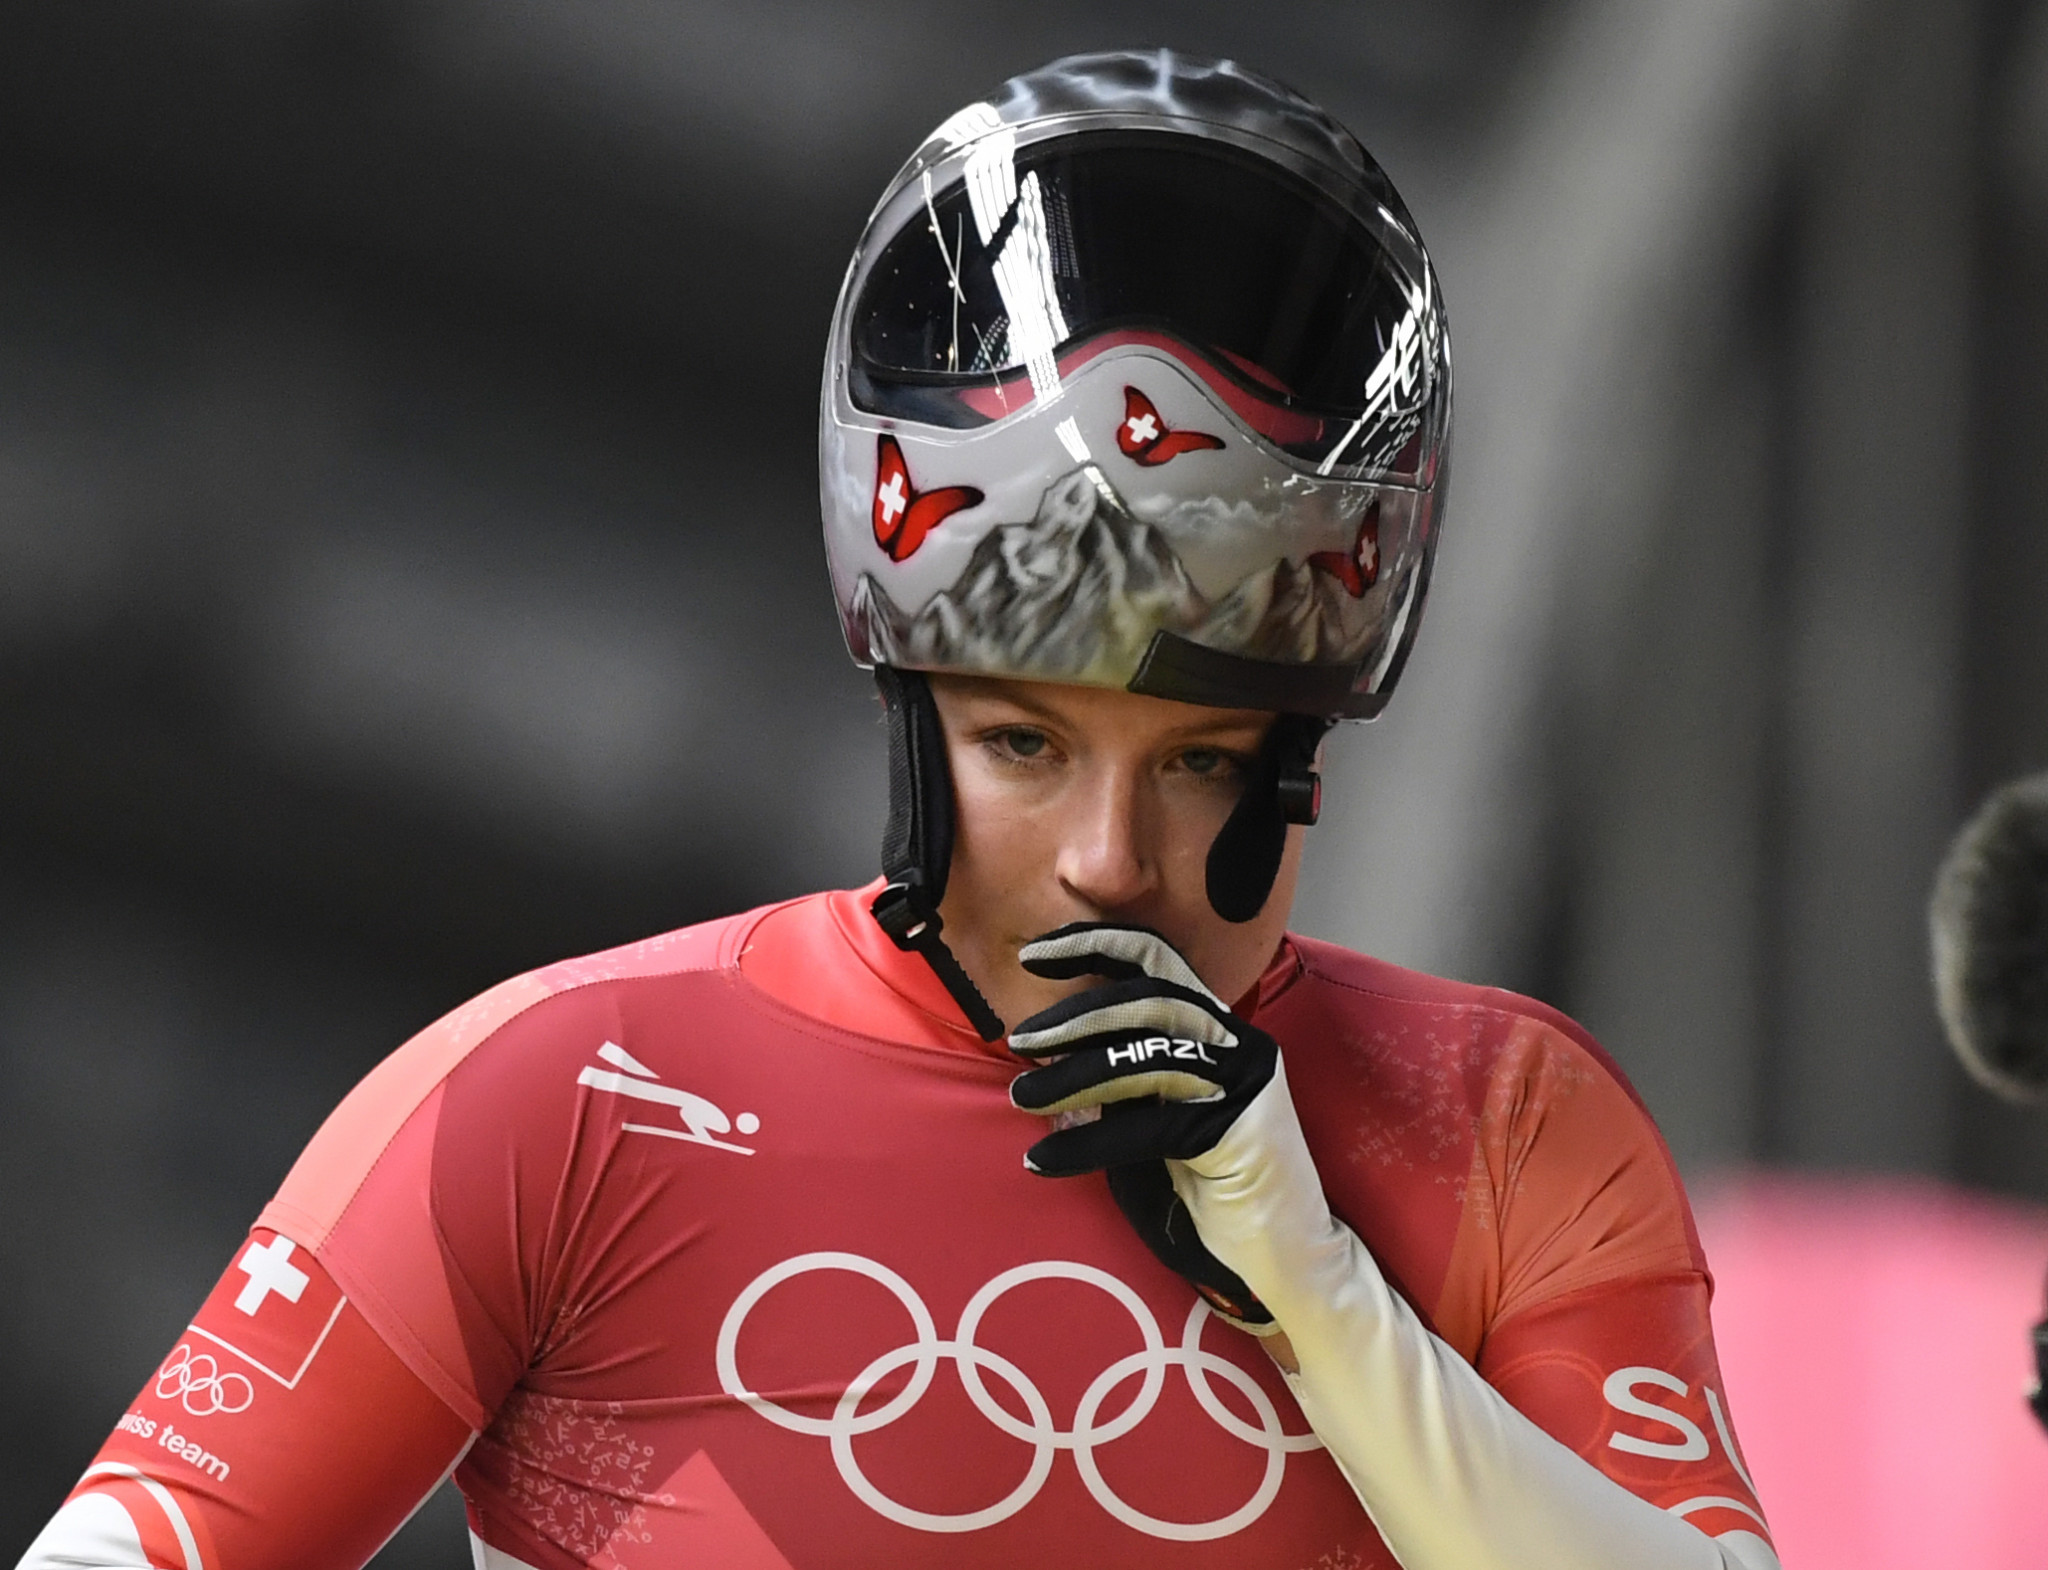 Switzerland's Marina Gilardoni was the country's lone skeleton slider at Pyeongchang 2018 ©Getty Images